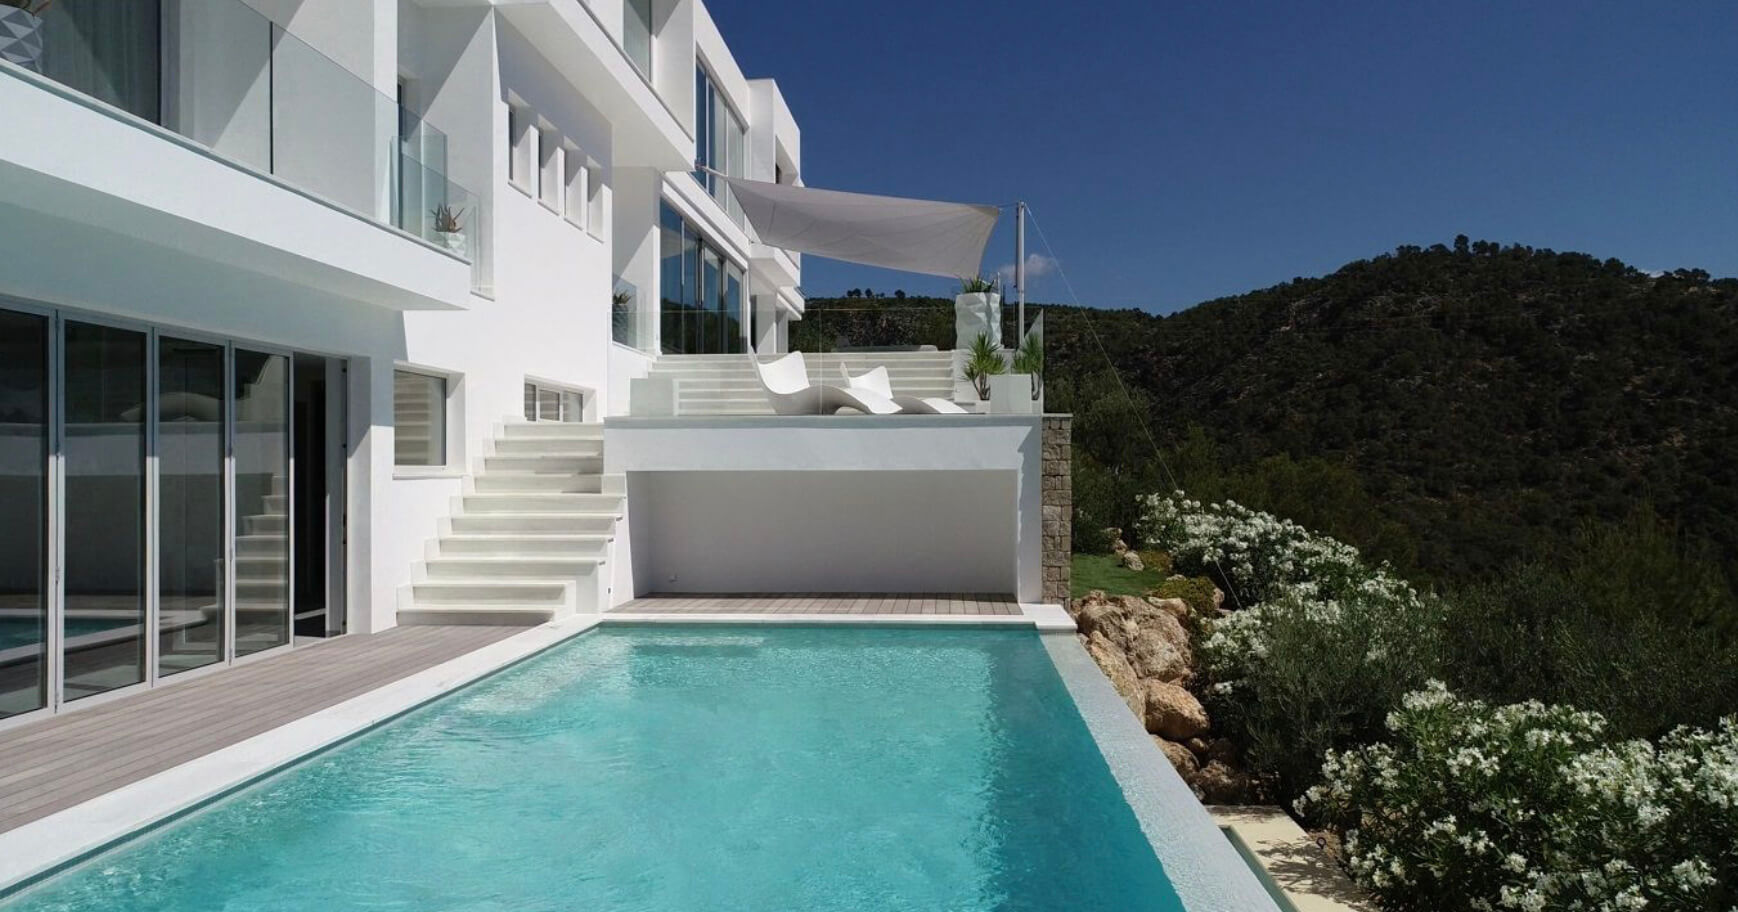 Lovian Properties present a spectacular villa in the exclusive location of Costa d’en Blanes